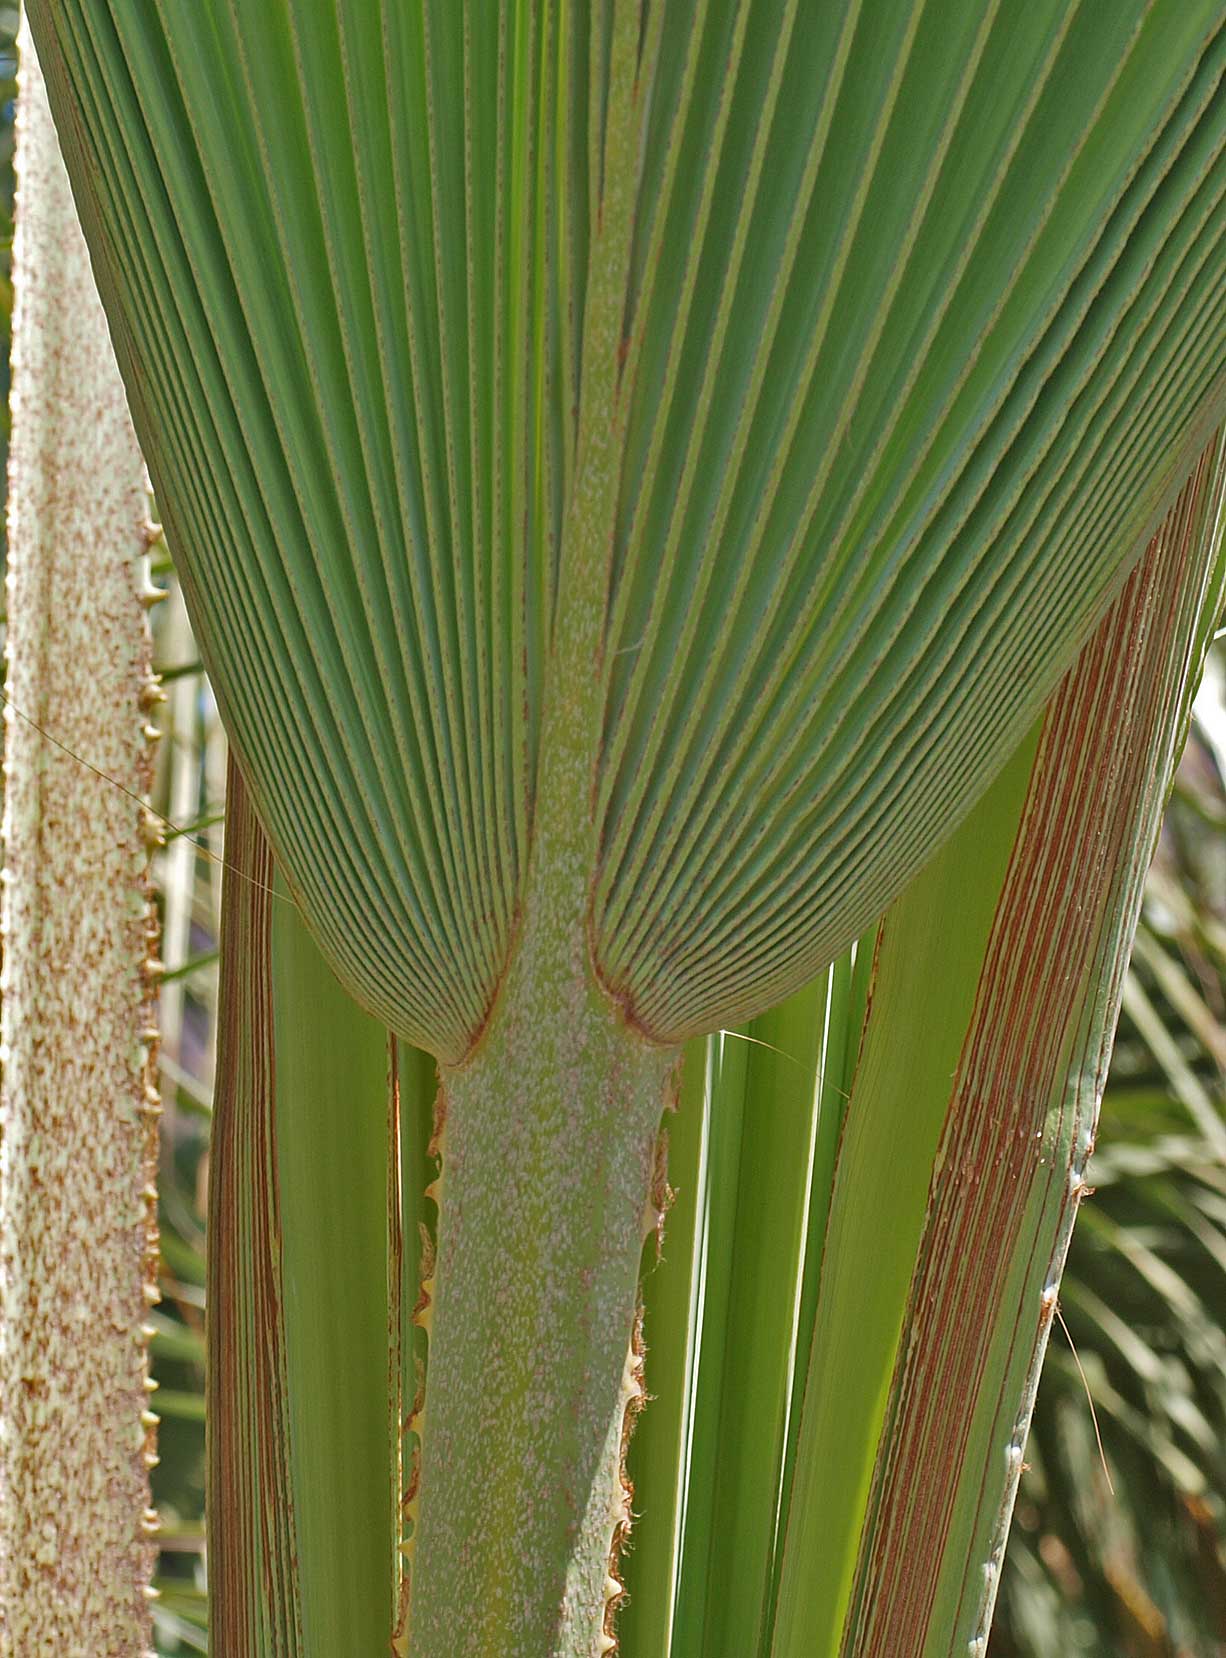   Brahea armata  abaxial leaf costa and marginal teeth on petiole 